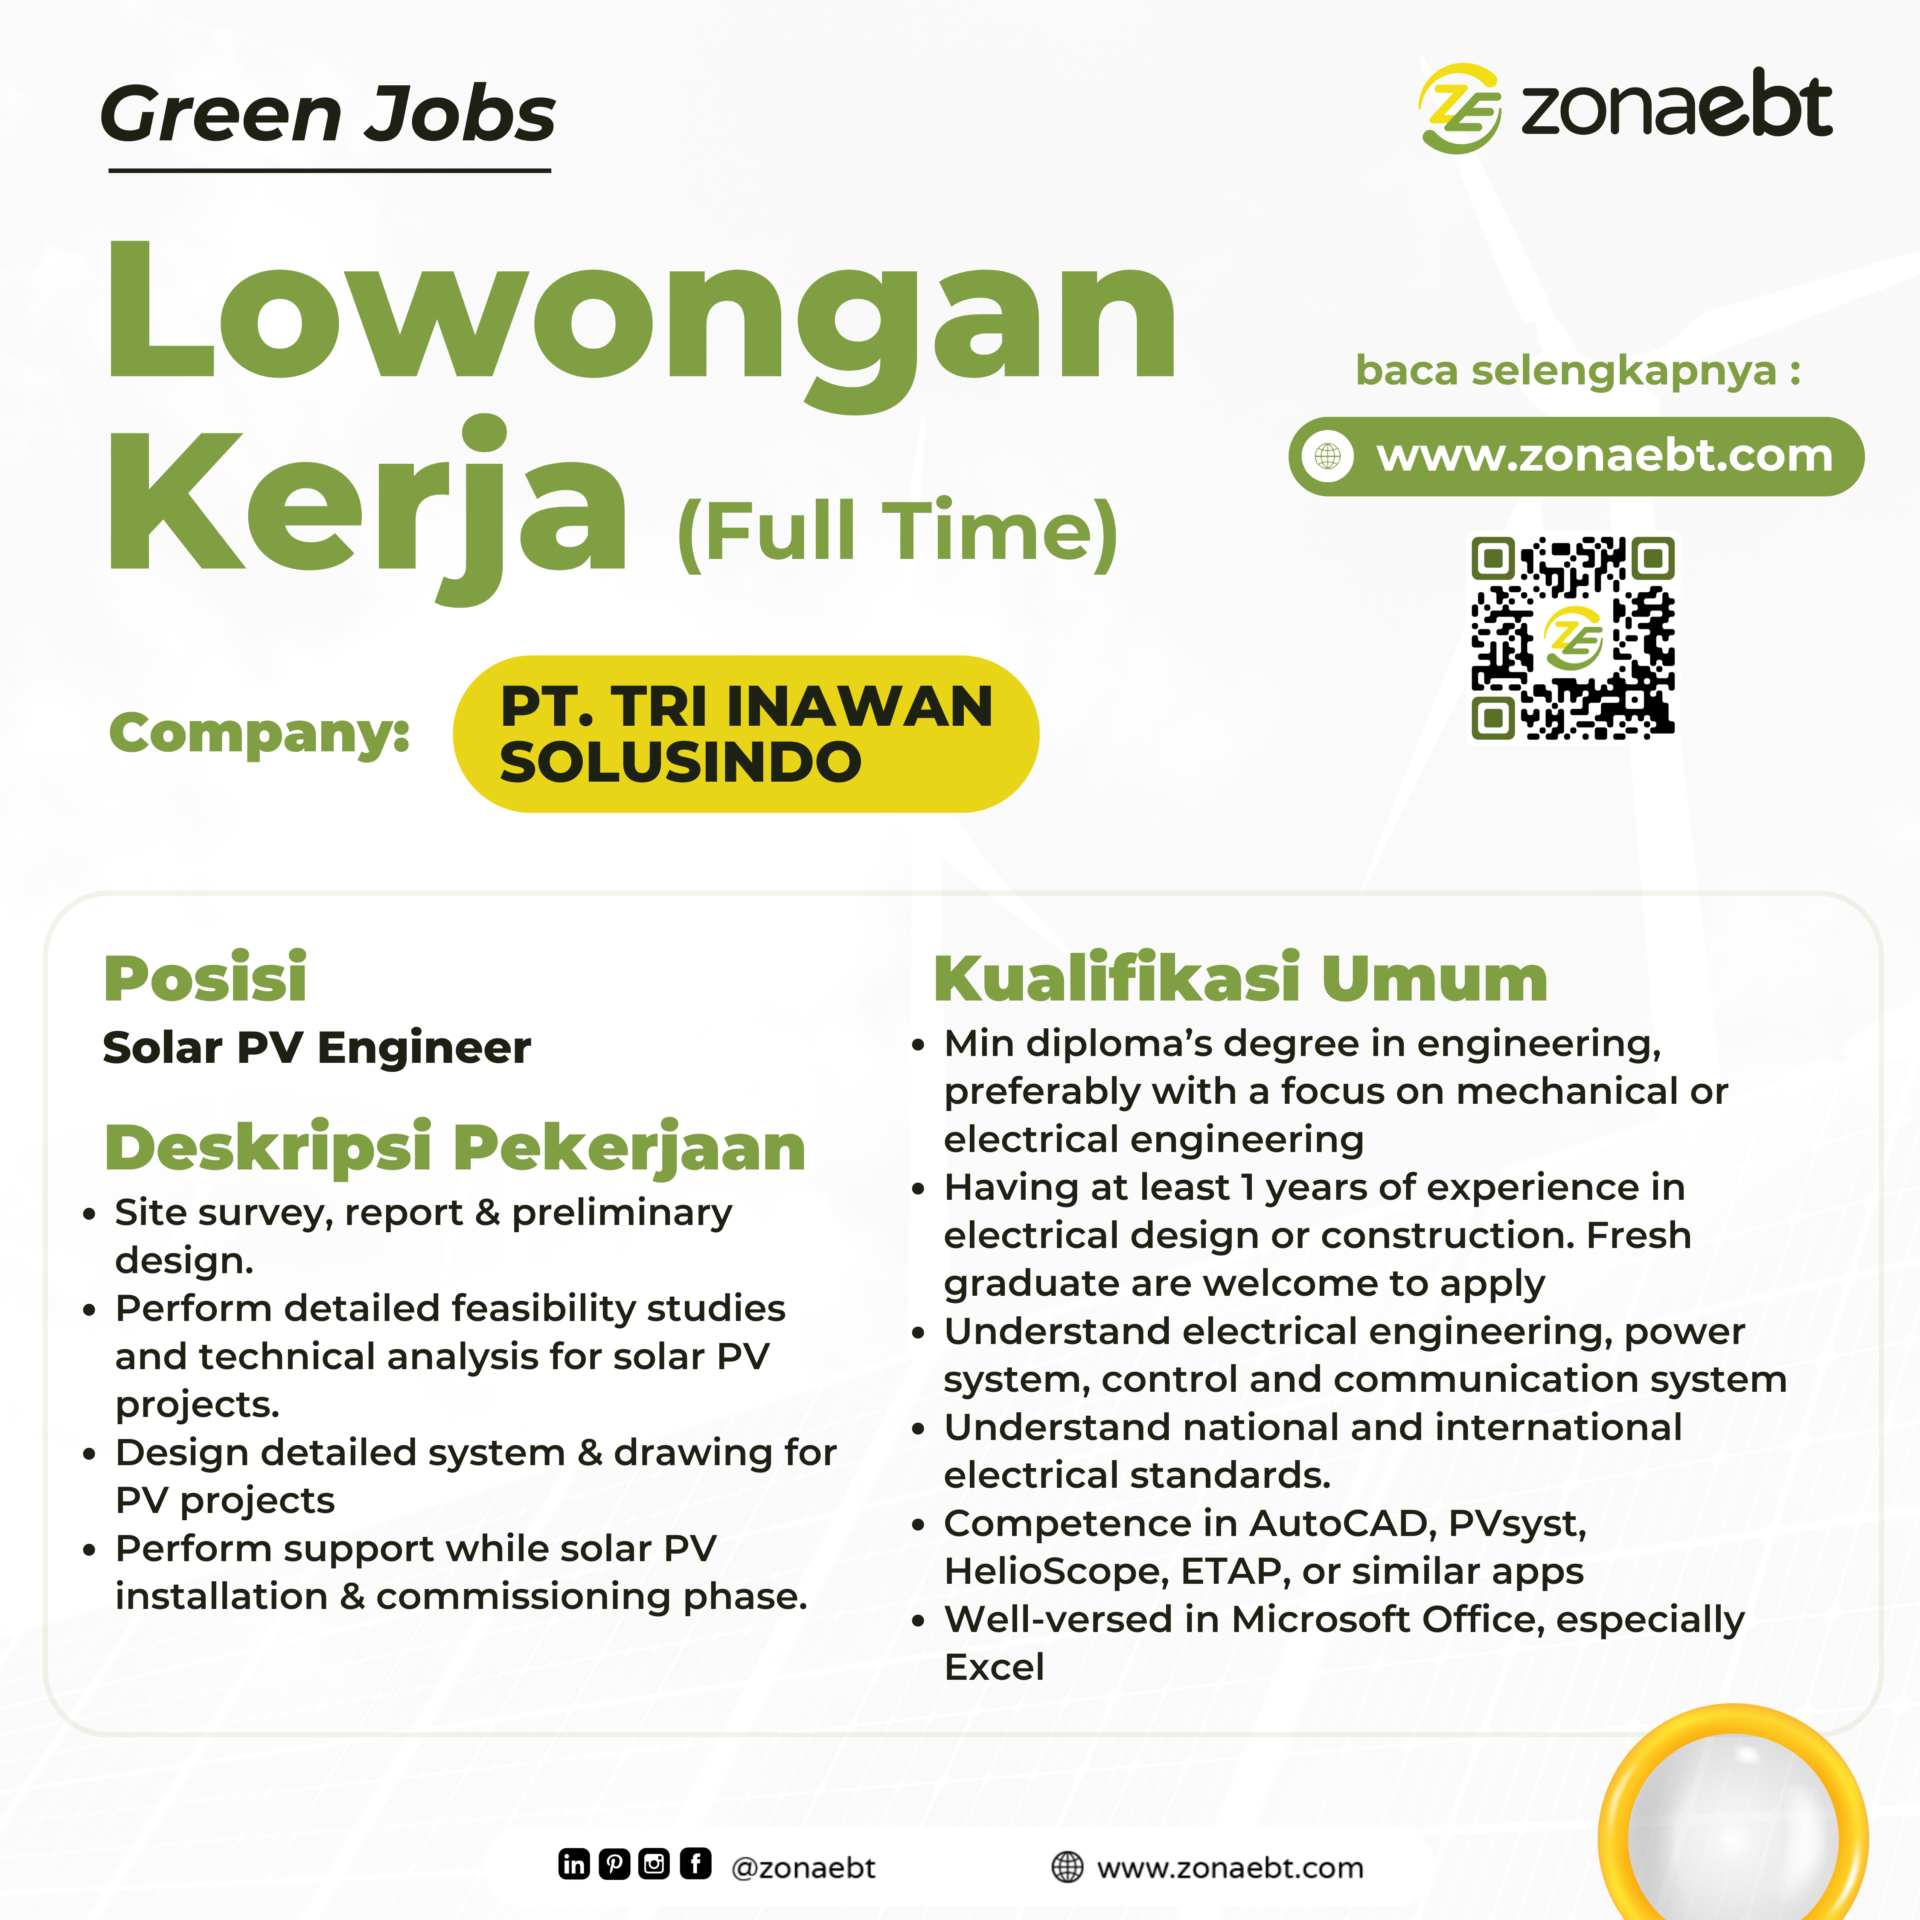 Post Solar PV Engineer greenjobs zonaebt.com